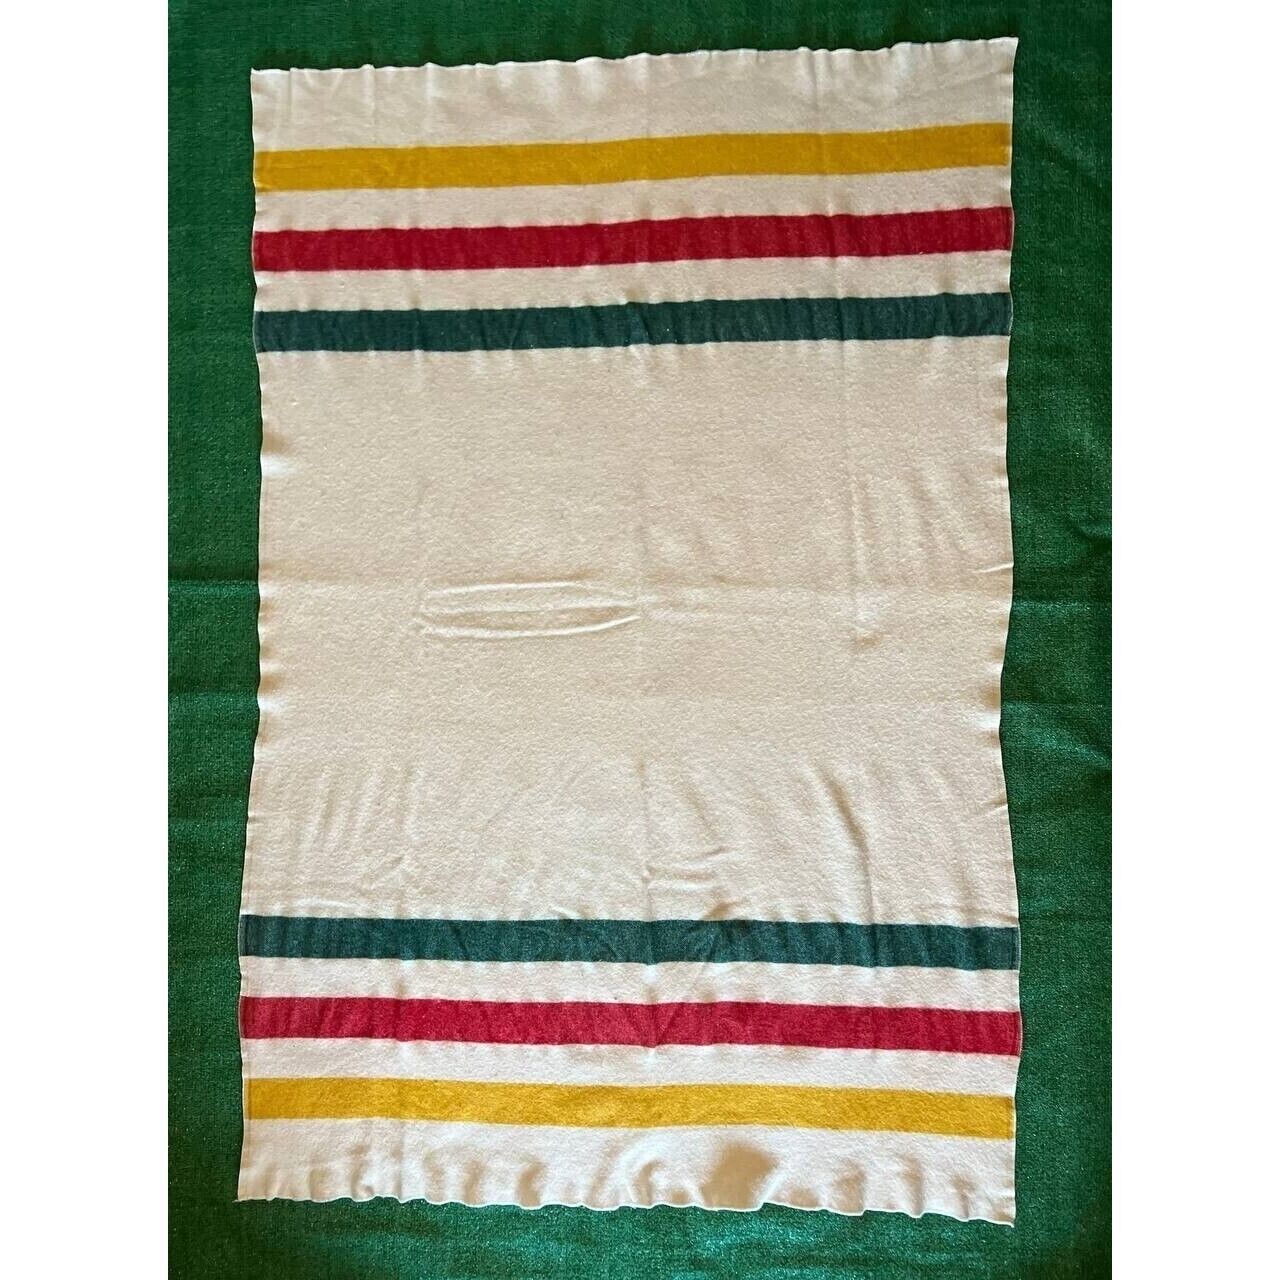 VTG Hudson Bay Striped Wool Blanket 3 Stripes 74x49